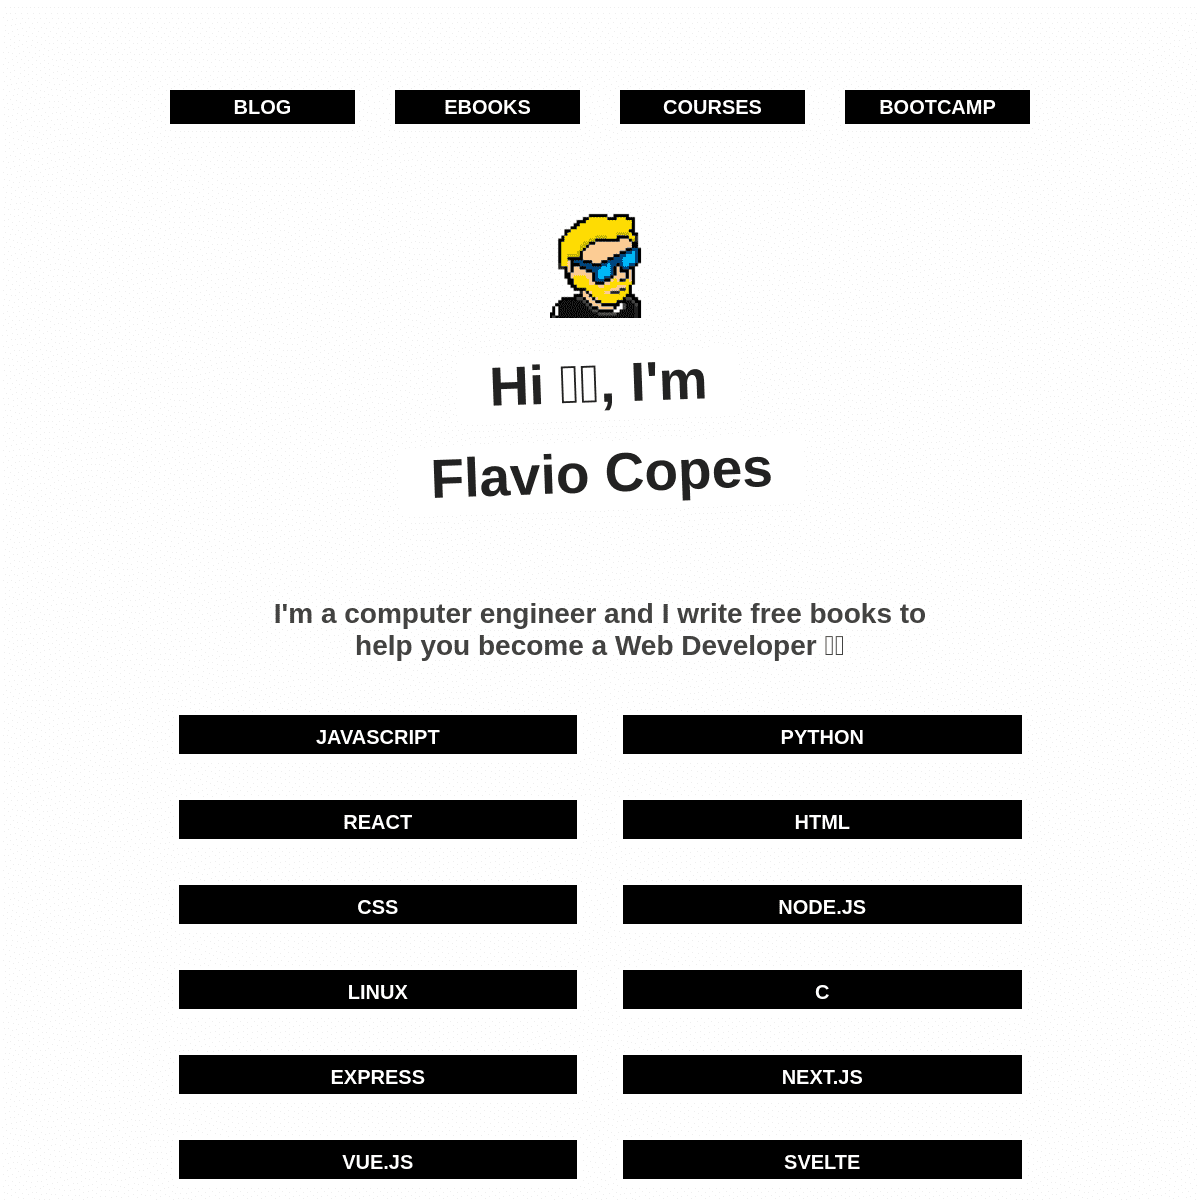 A complete backup of https://flaviocopes.com